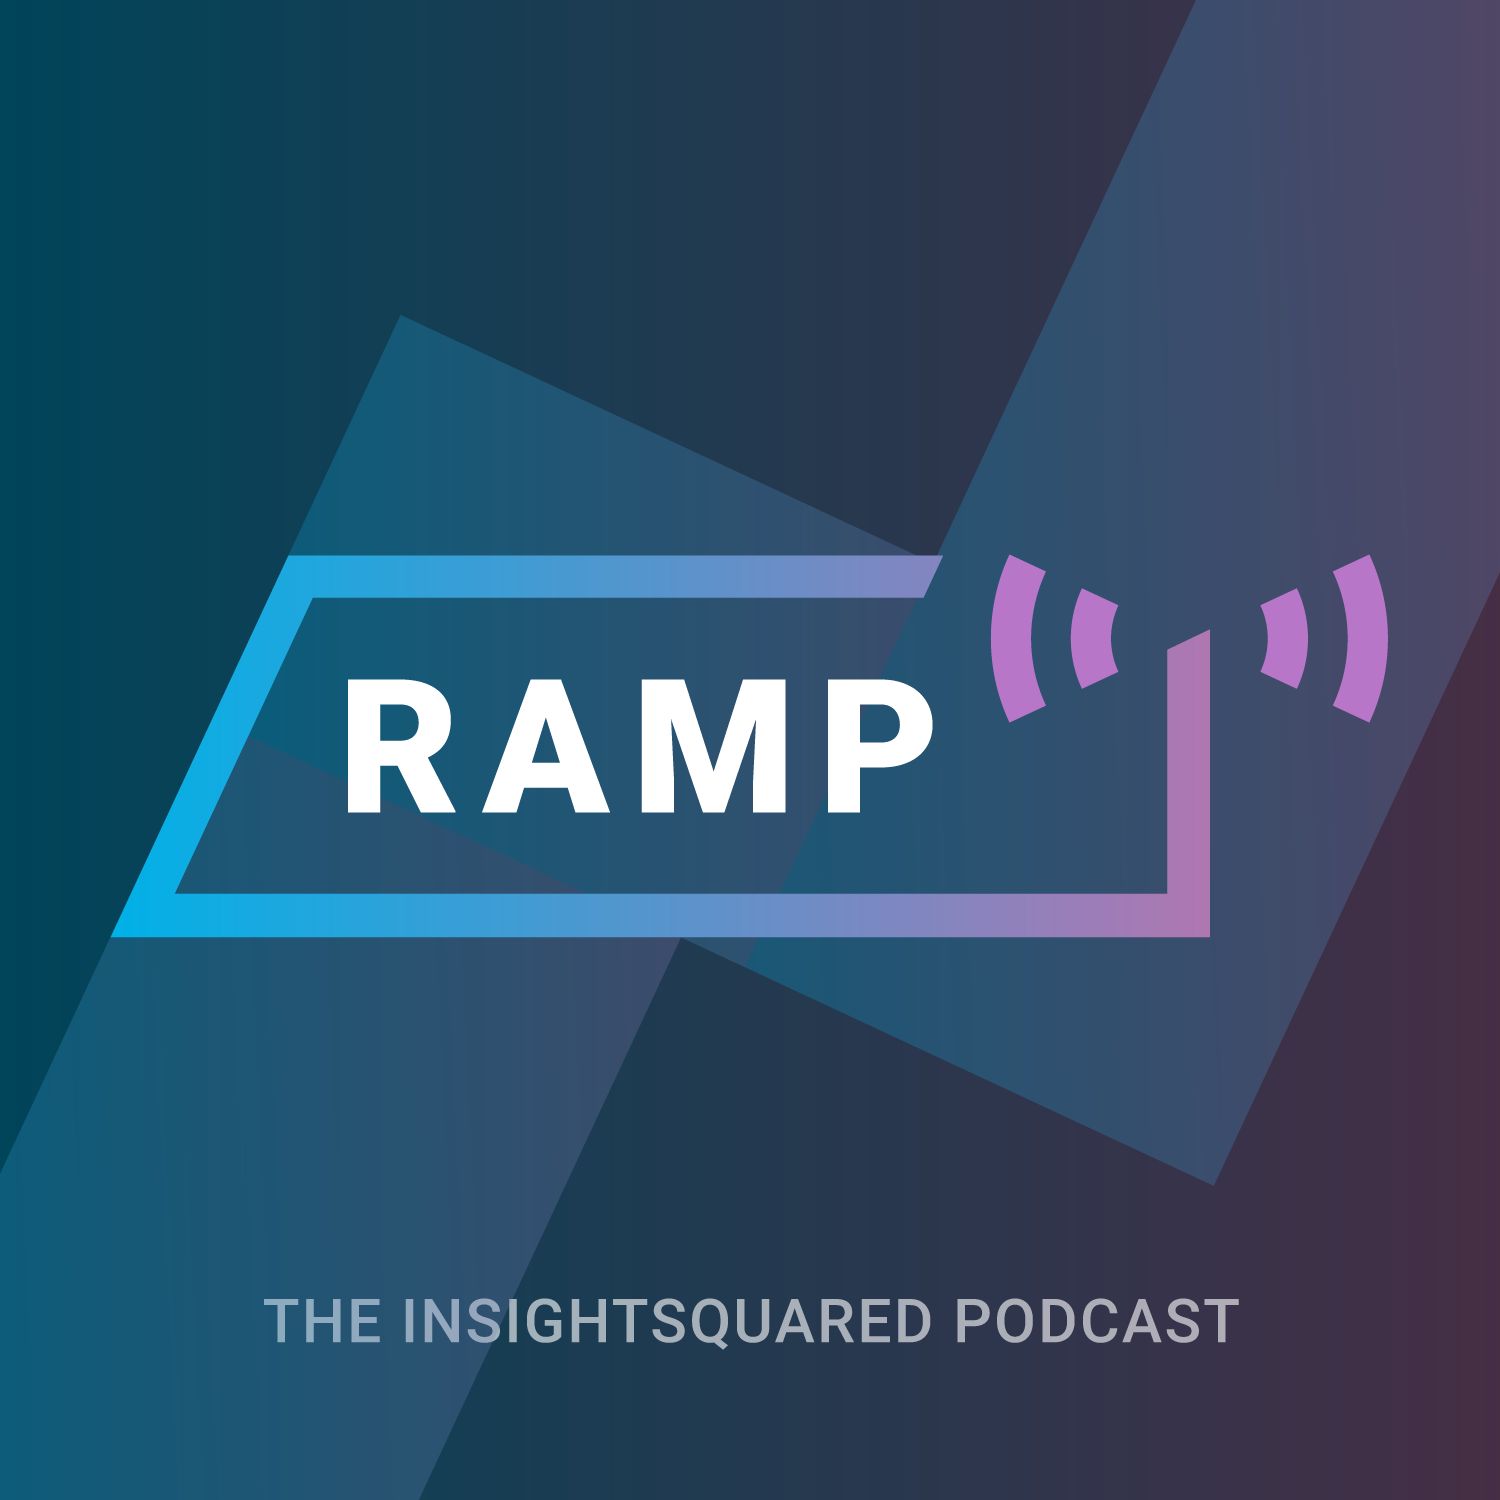 Ramp: The SaaS Analytics Podcast